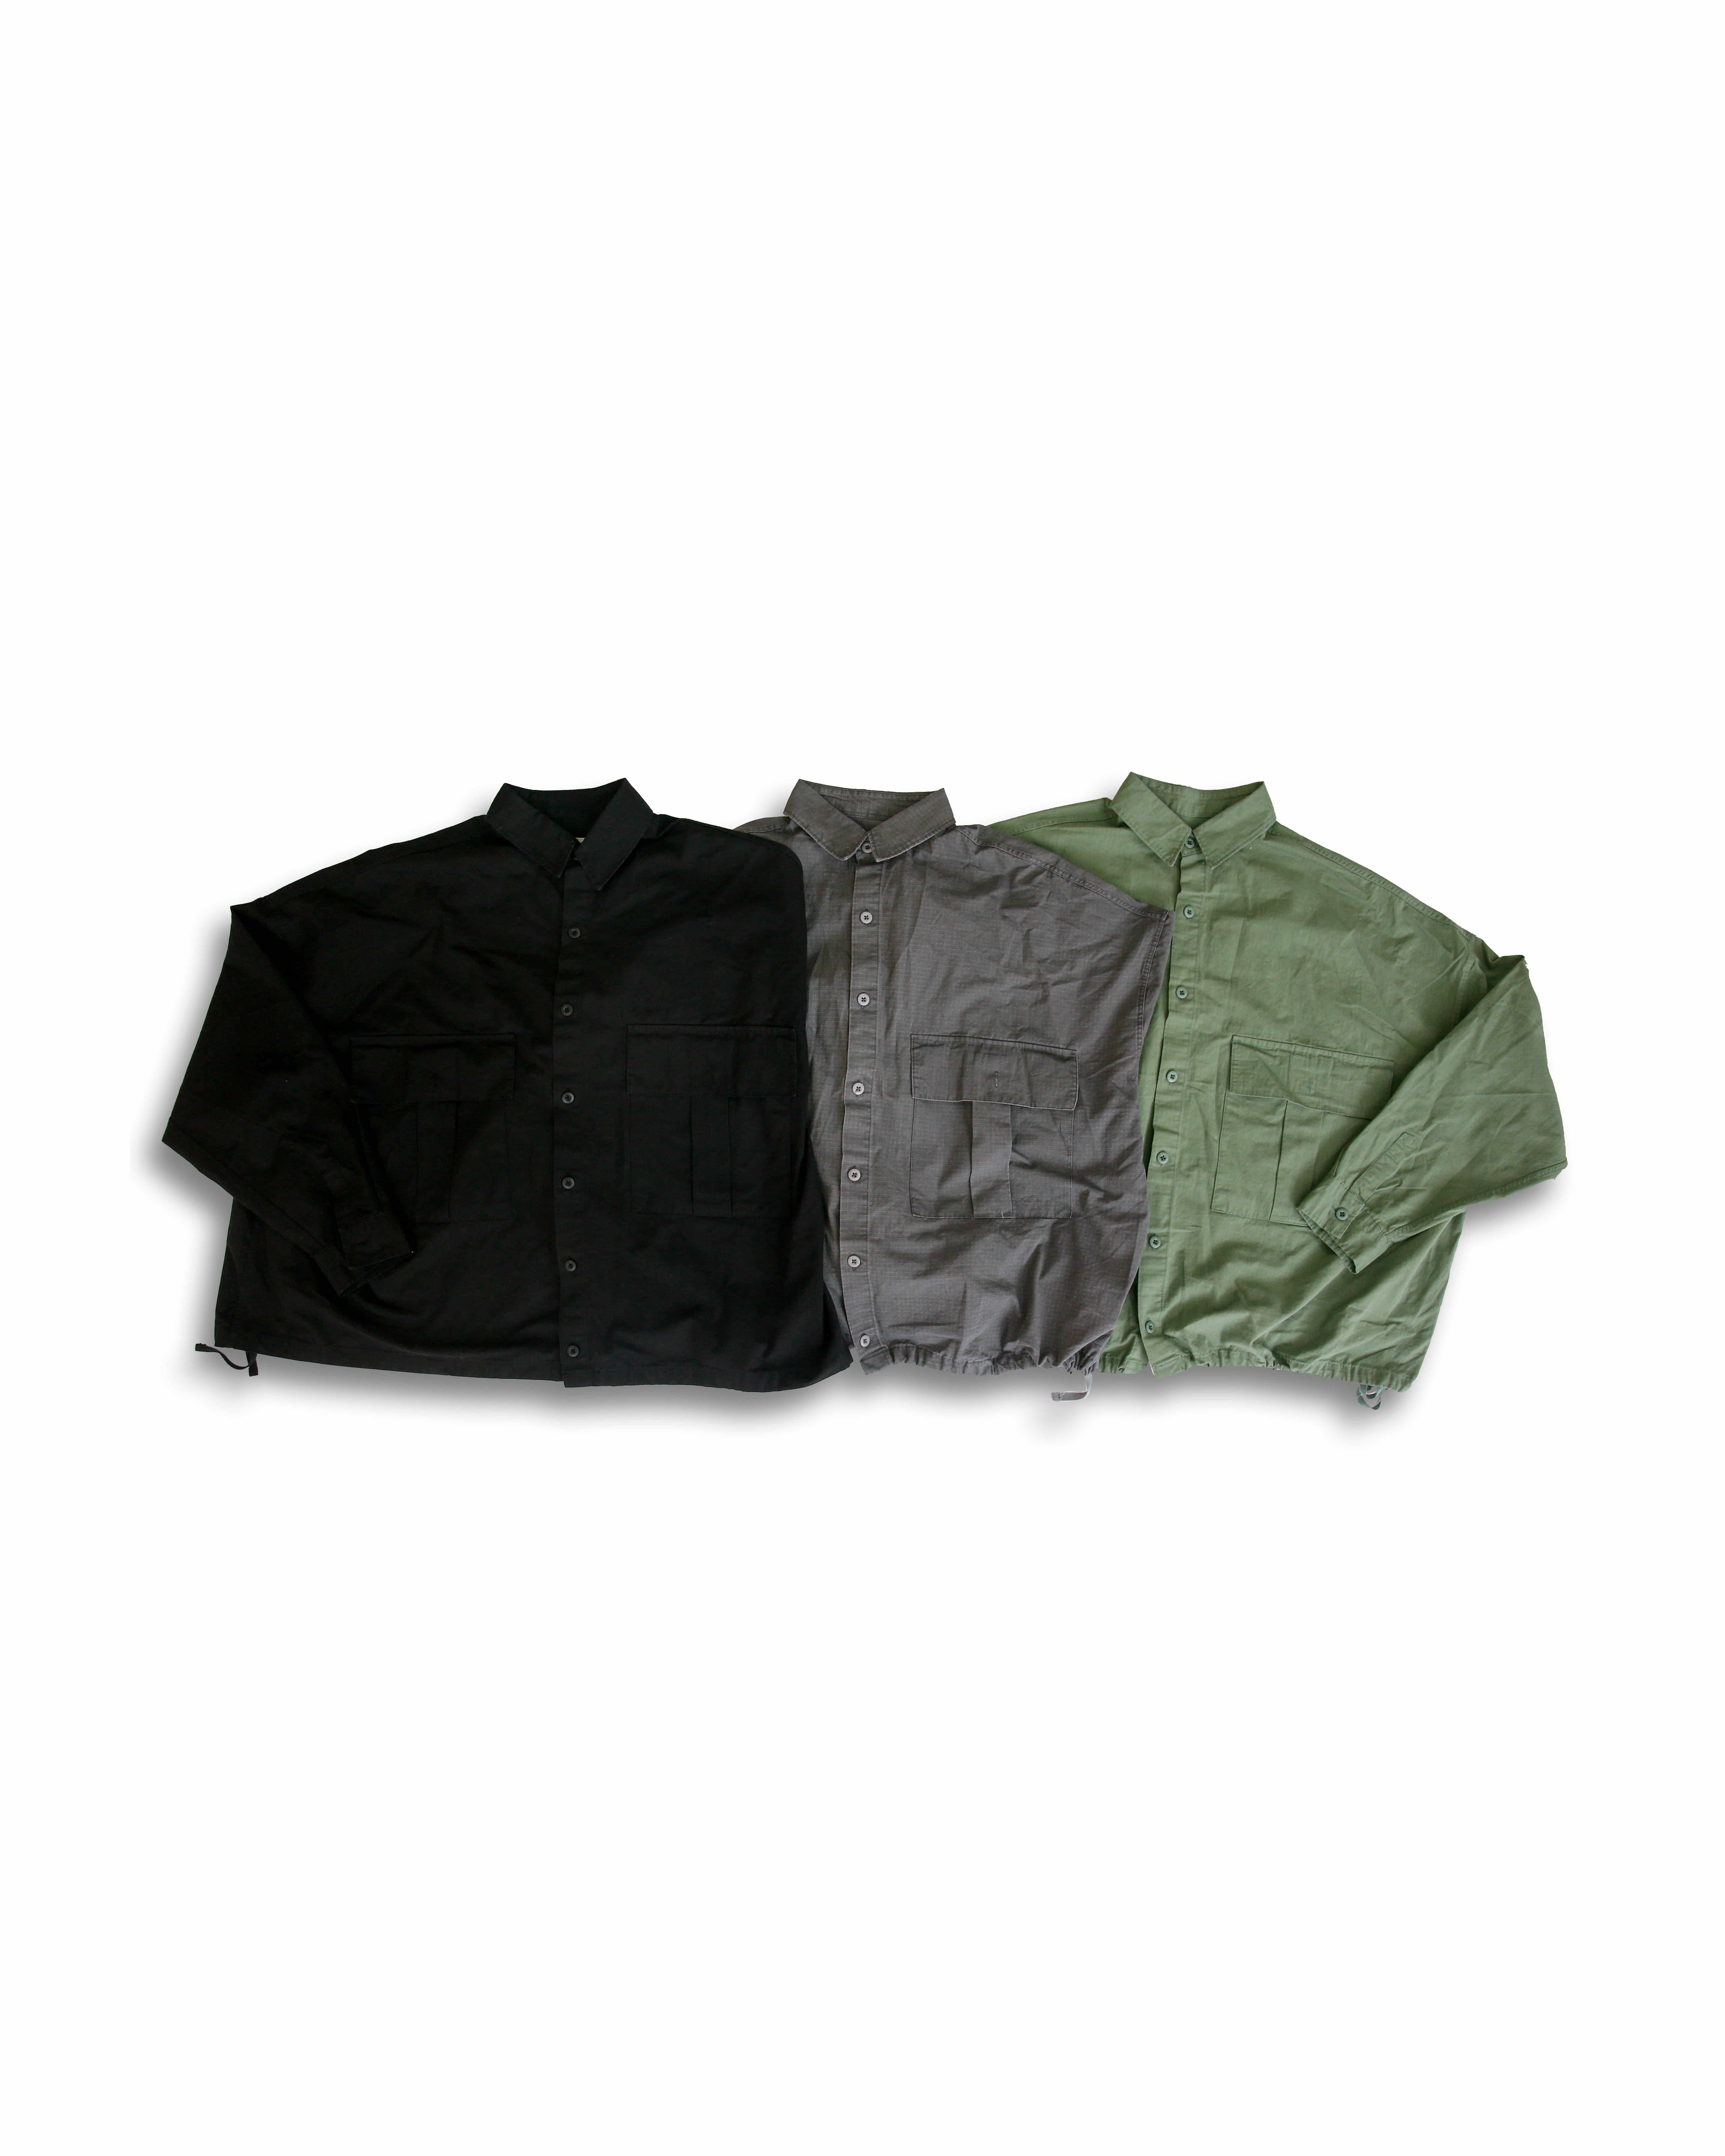 Military Pocket Shirts Jacket (Black/Khaki/Gray)